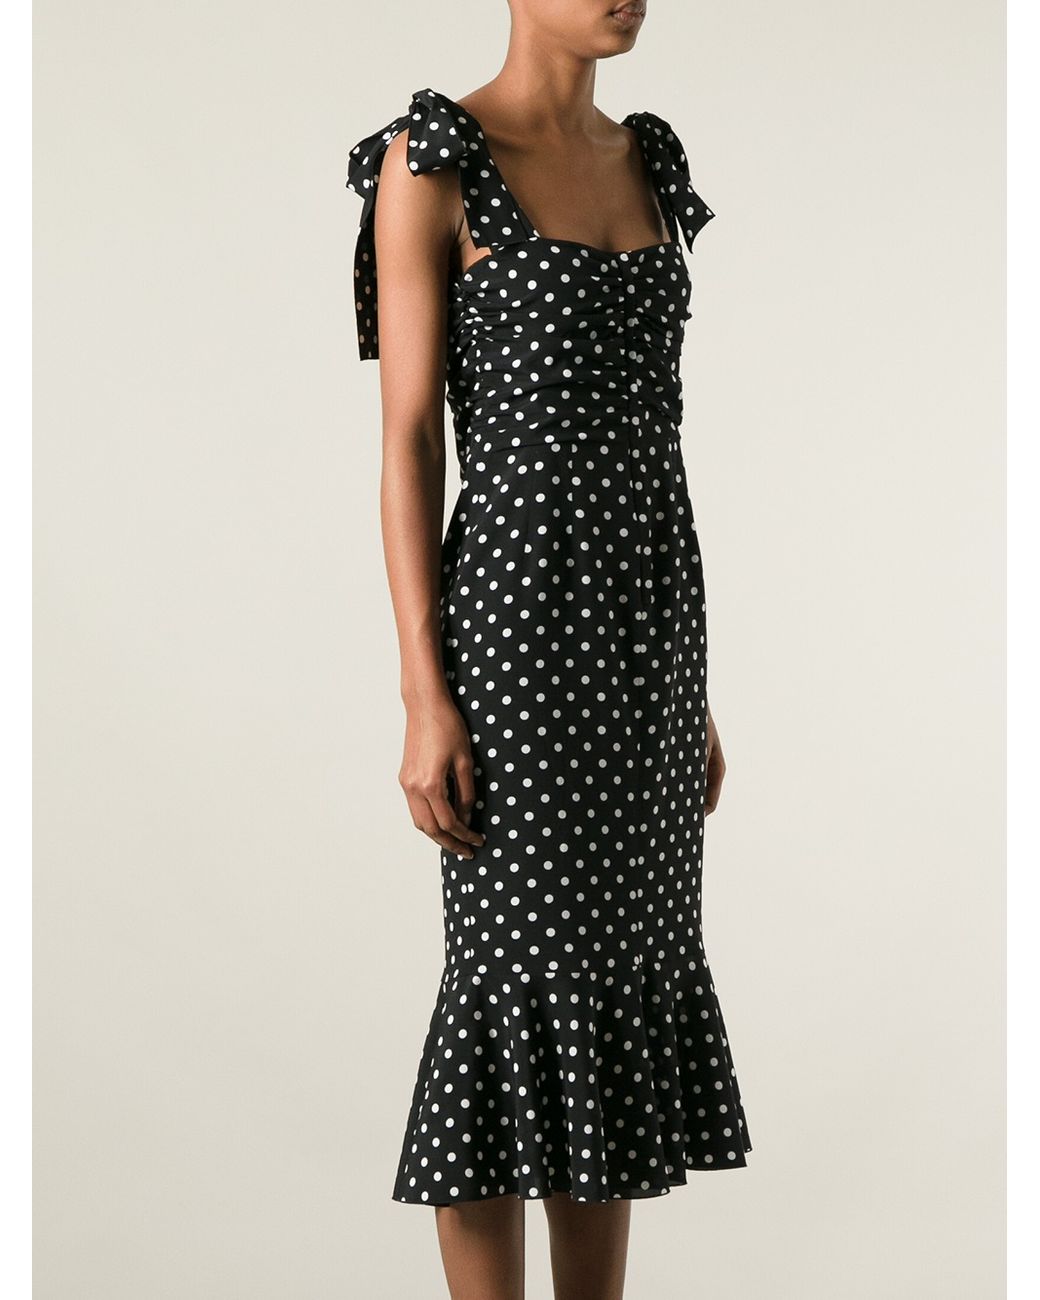 Dolce & Gabbana Polka Dot Dress in Black | Lyst